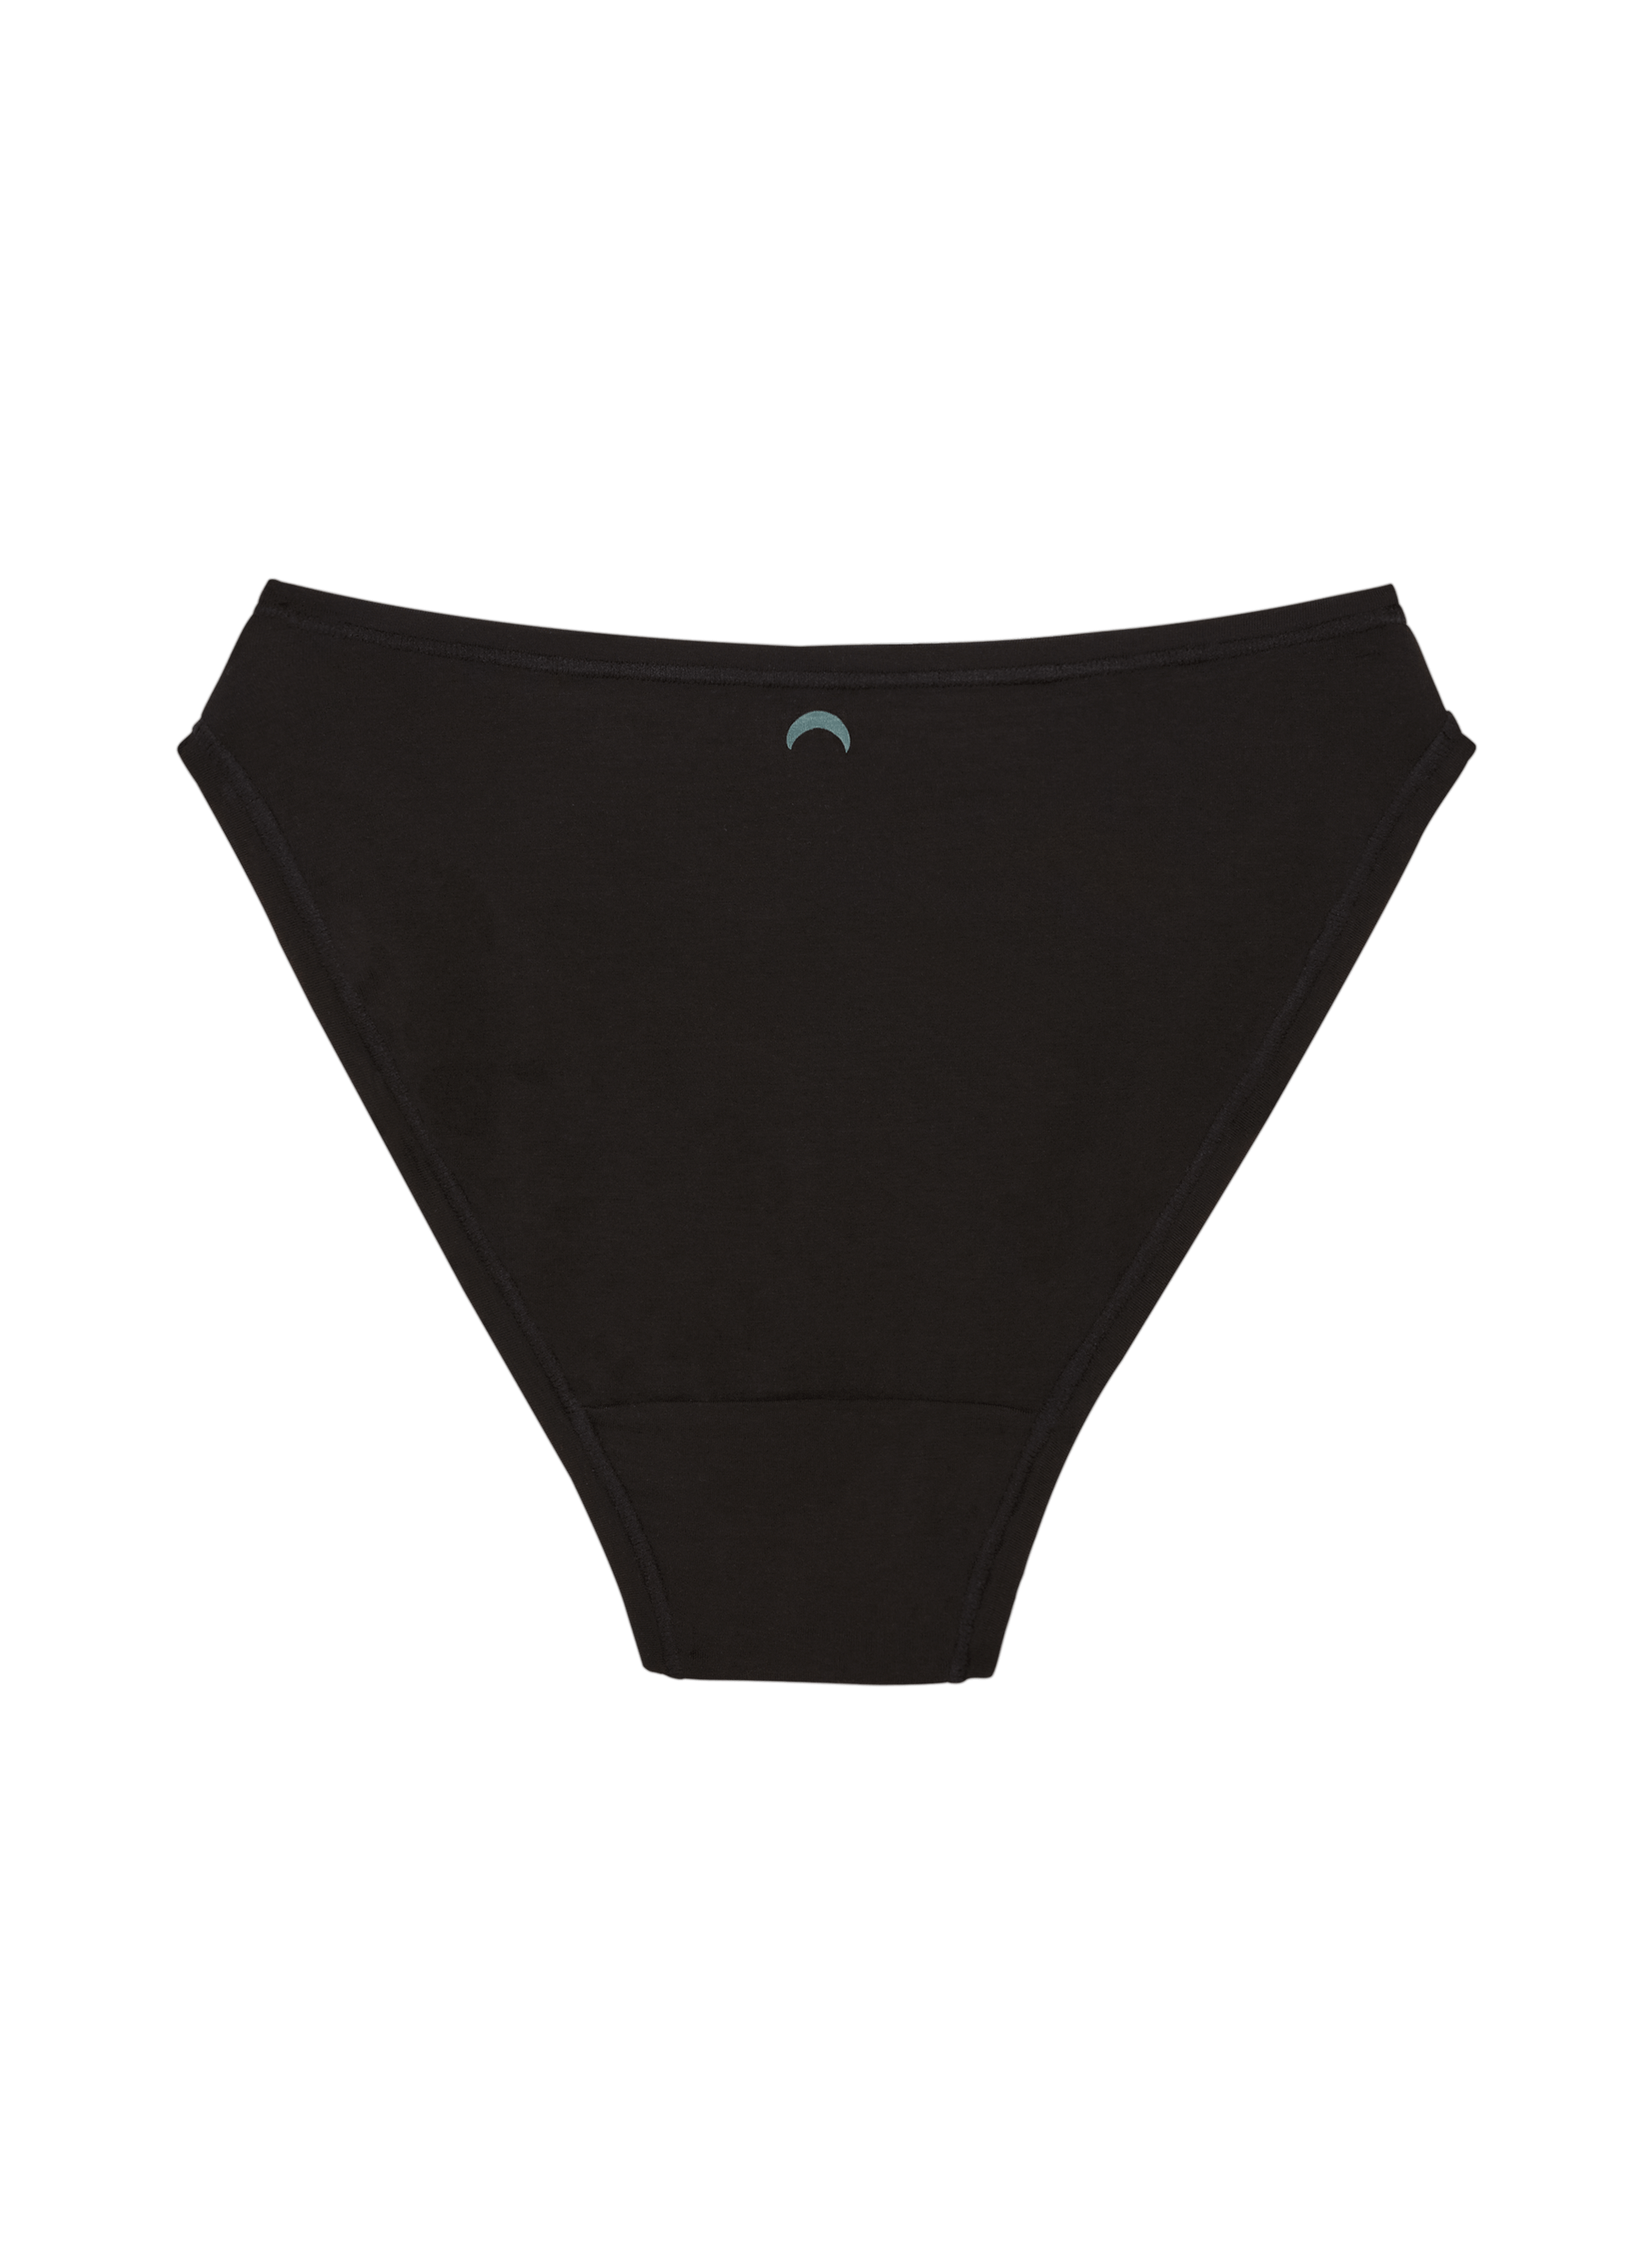 Bonds Women's BCUÃ‚ Bikini Heavy Bikini Style Underwear, Black, 6 US :  : Clothing, Shoes & Accessories